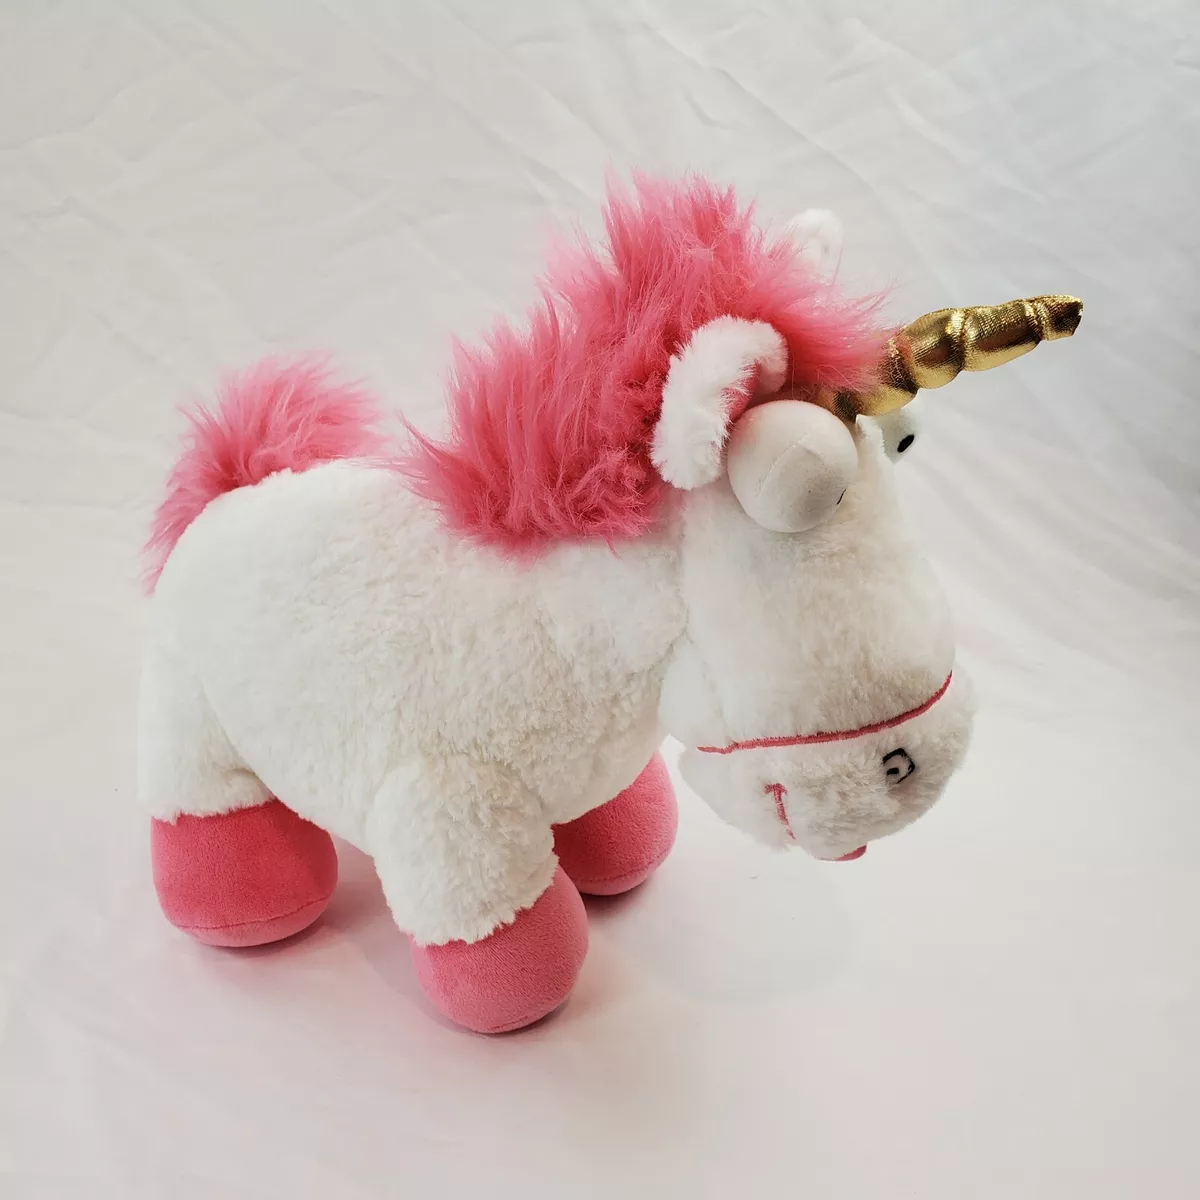 Despicable Me 3 Fluffy Unicorn Stuffed Animal Plush Toy 7 